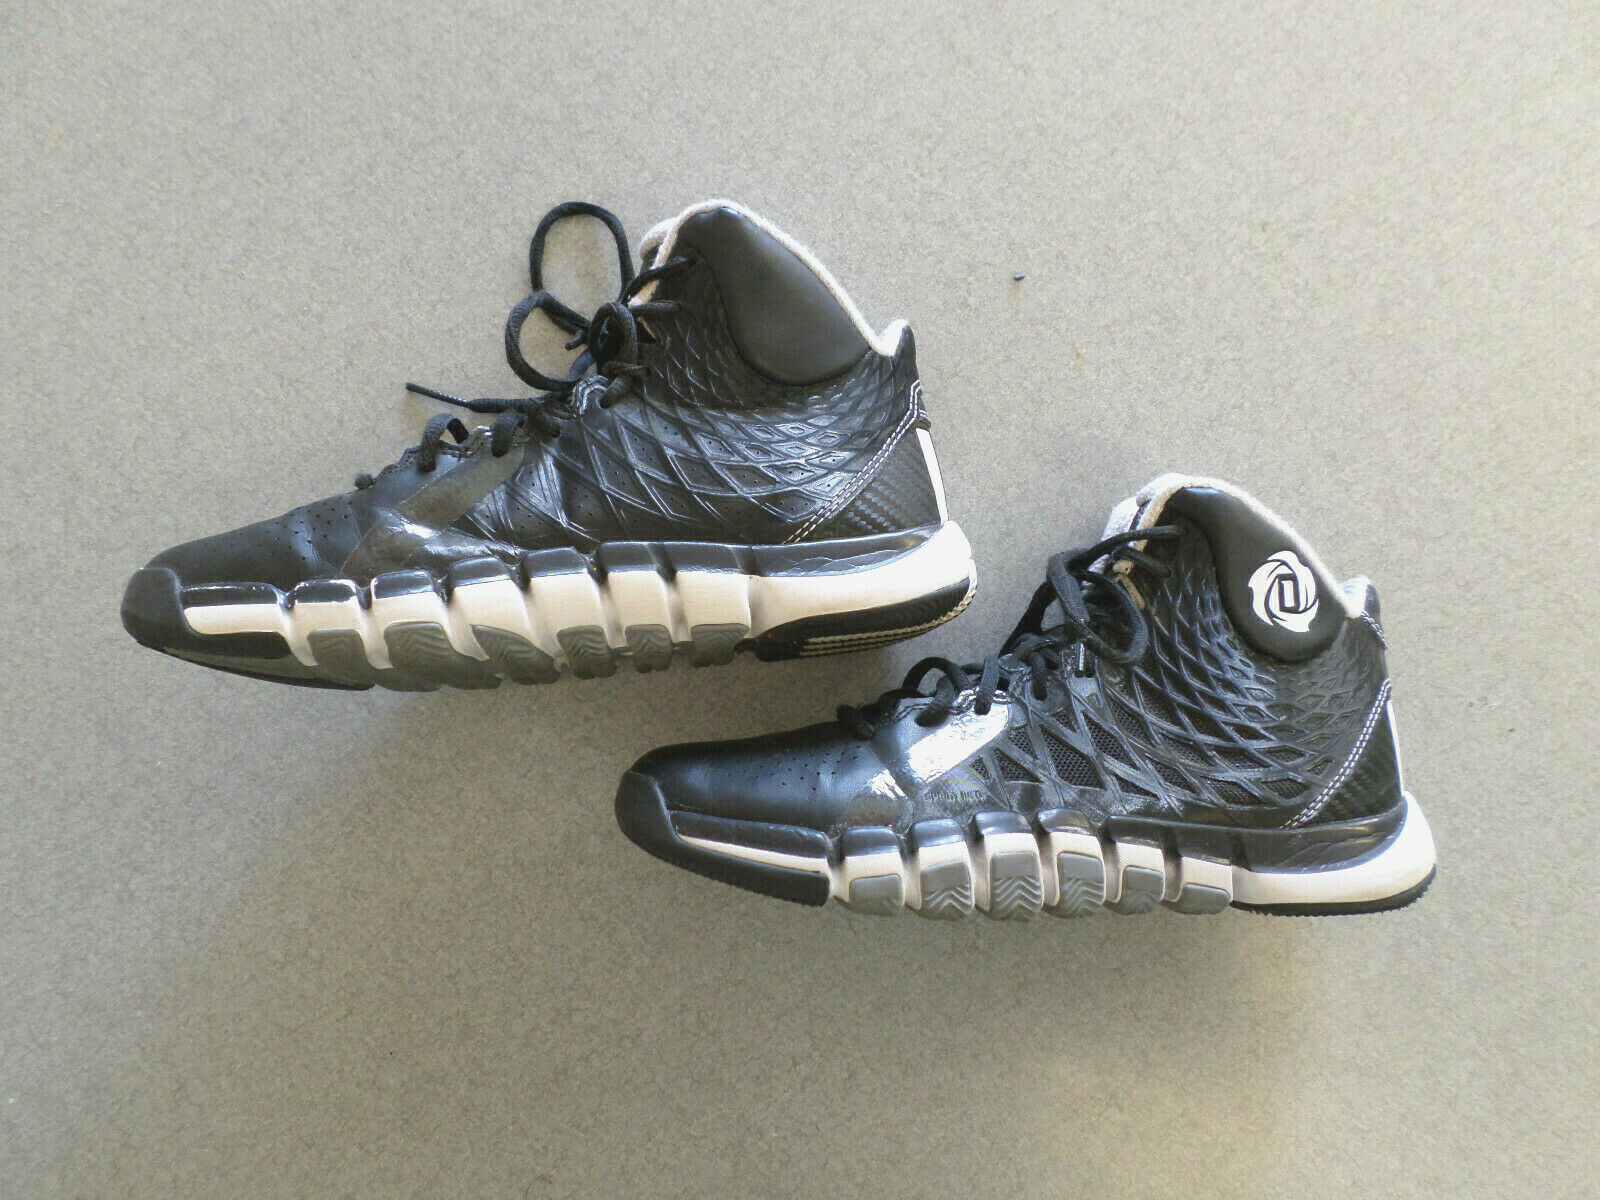 Adidas D. Rose "Hombres" black leather basketball shoes. Men's 6.5 (eur 39.5)